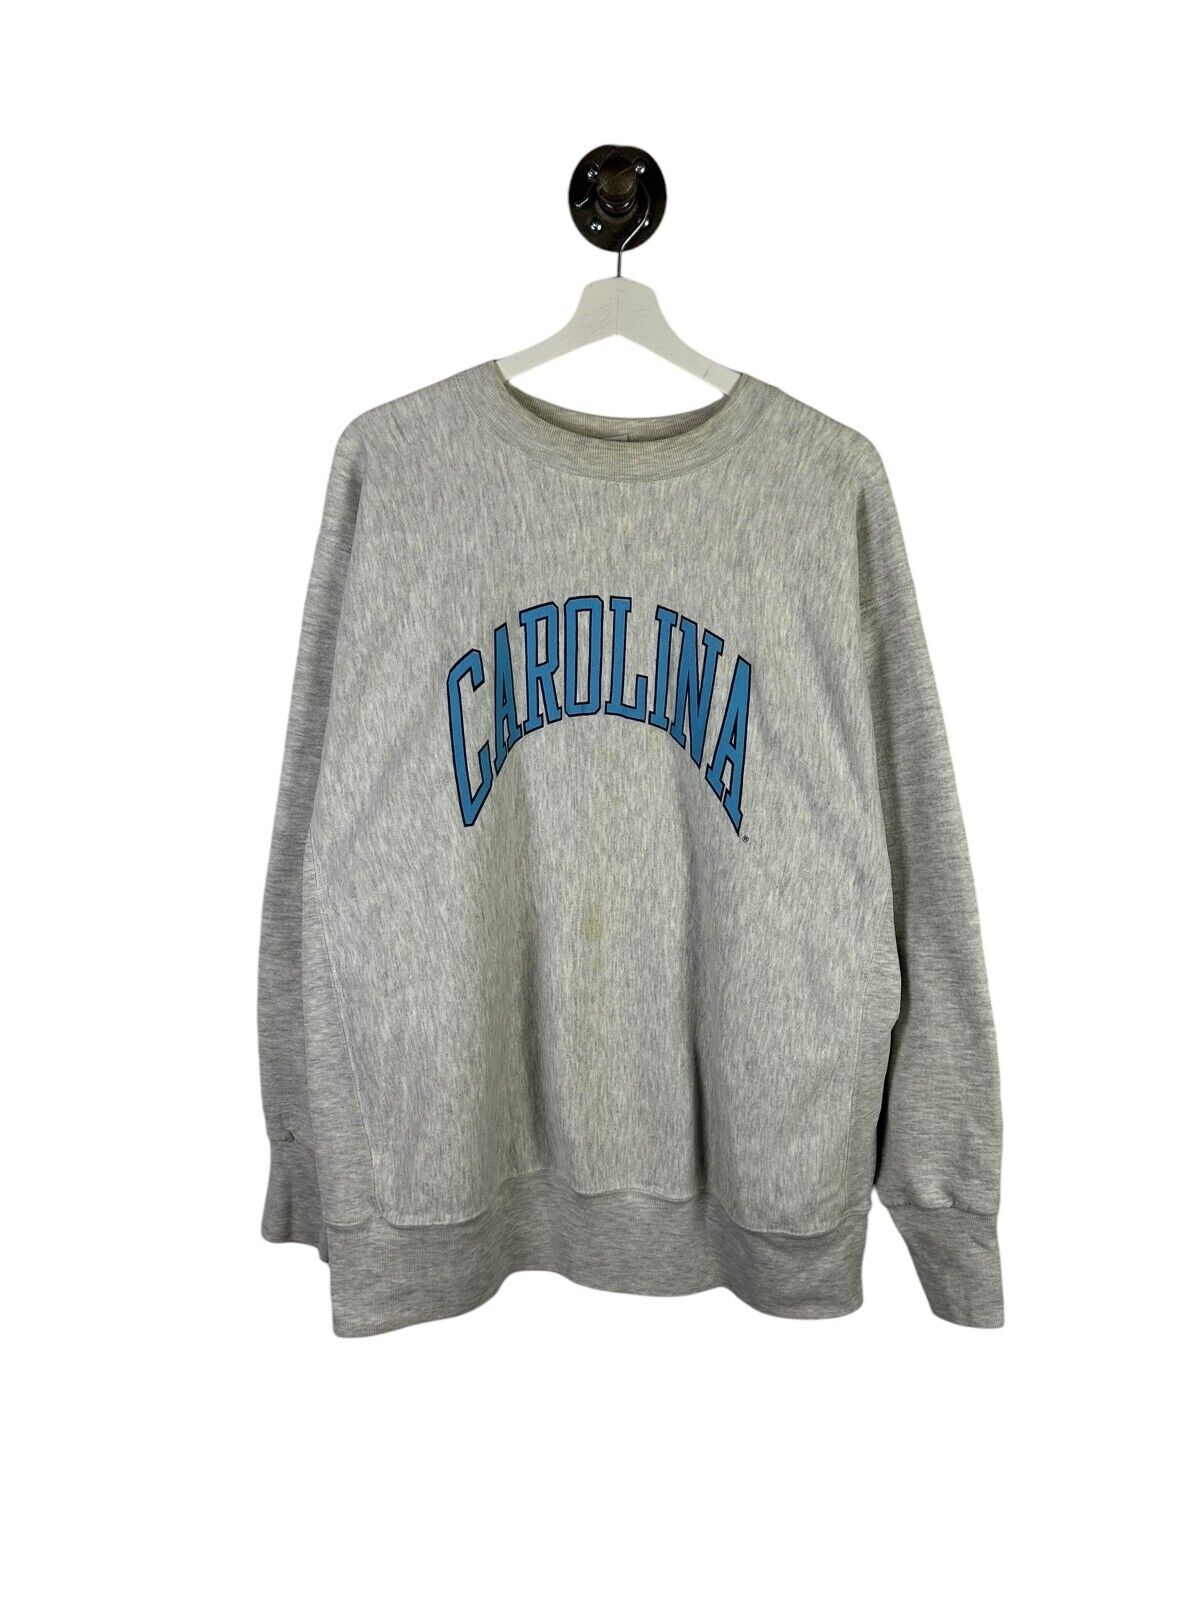 Vtg 90s Carolina Spell Out NCAA Reverse Weave Style Sweatshirt Sz 2XL Gray